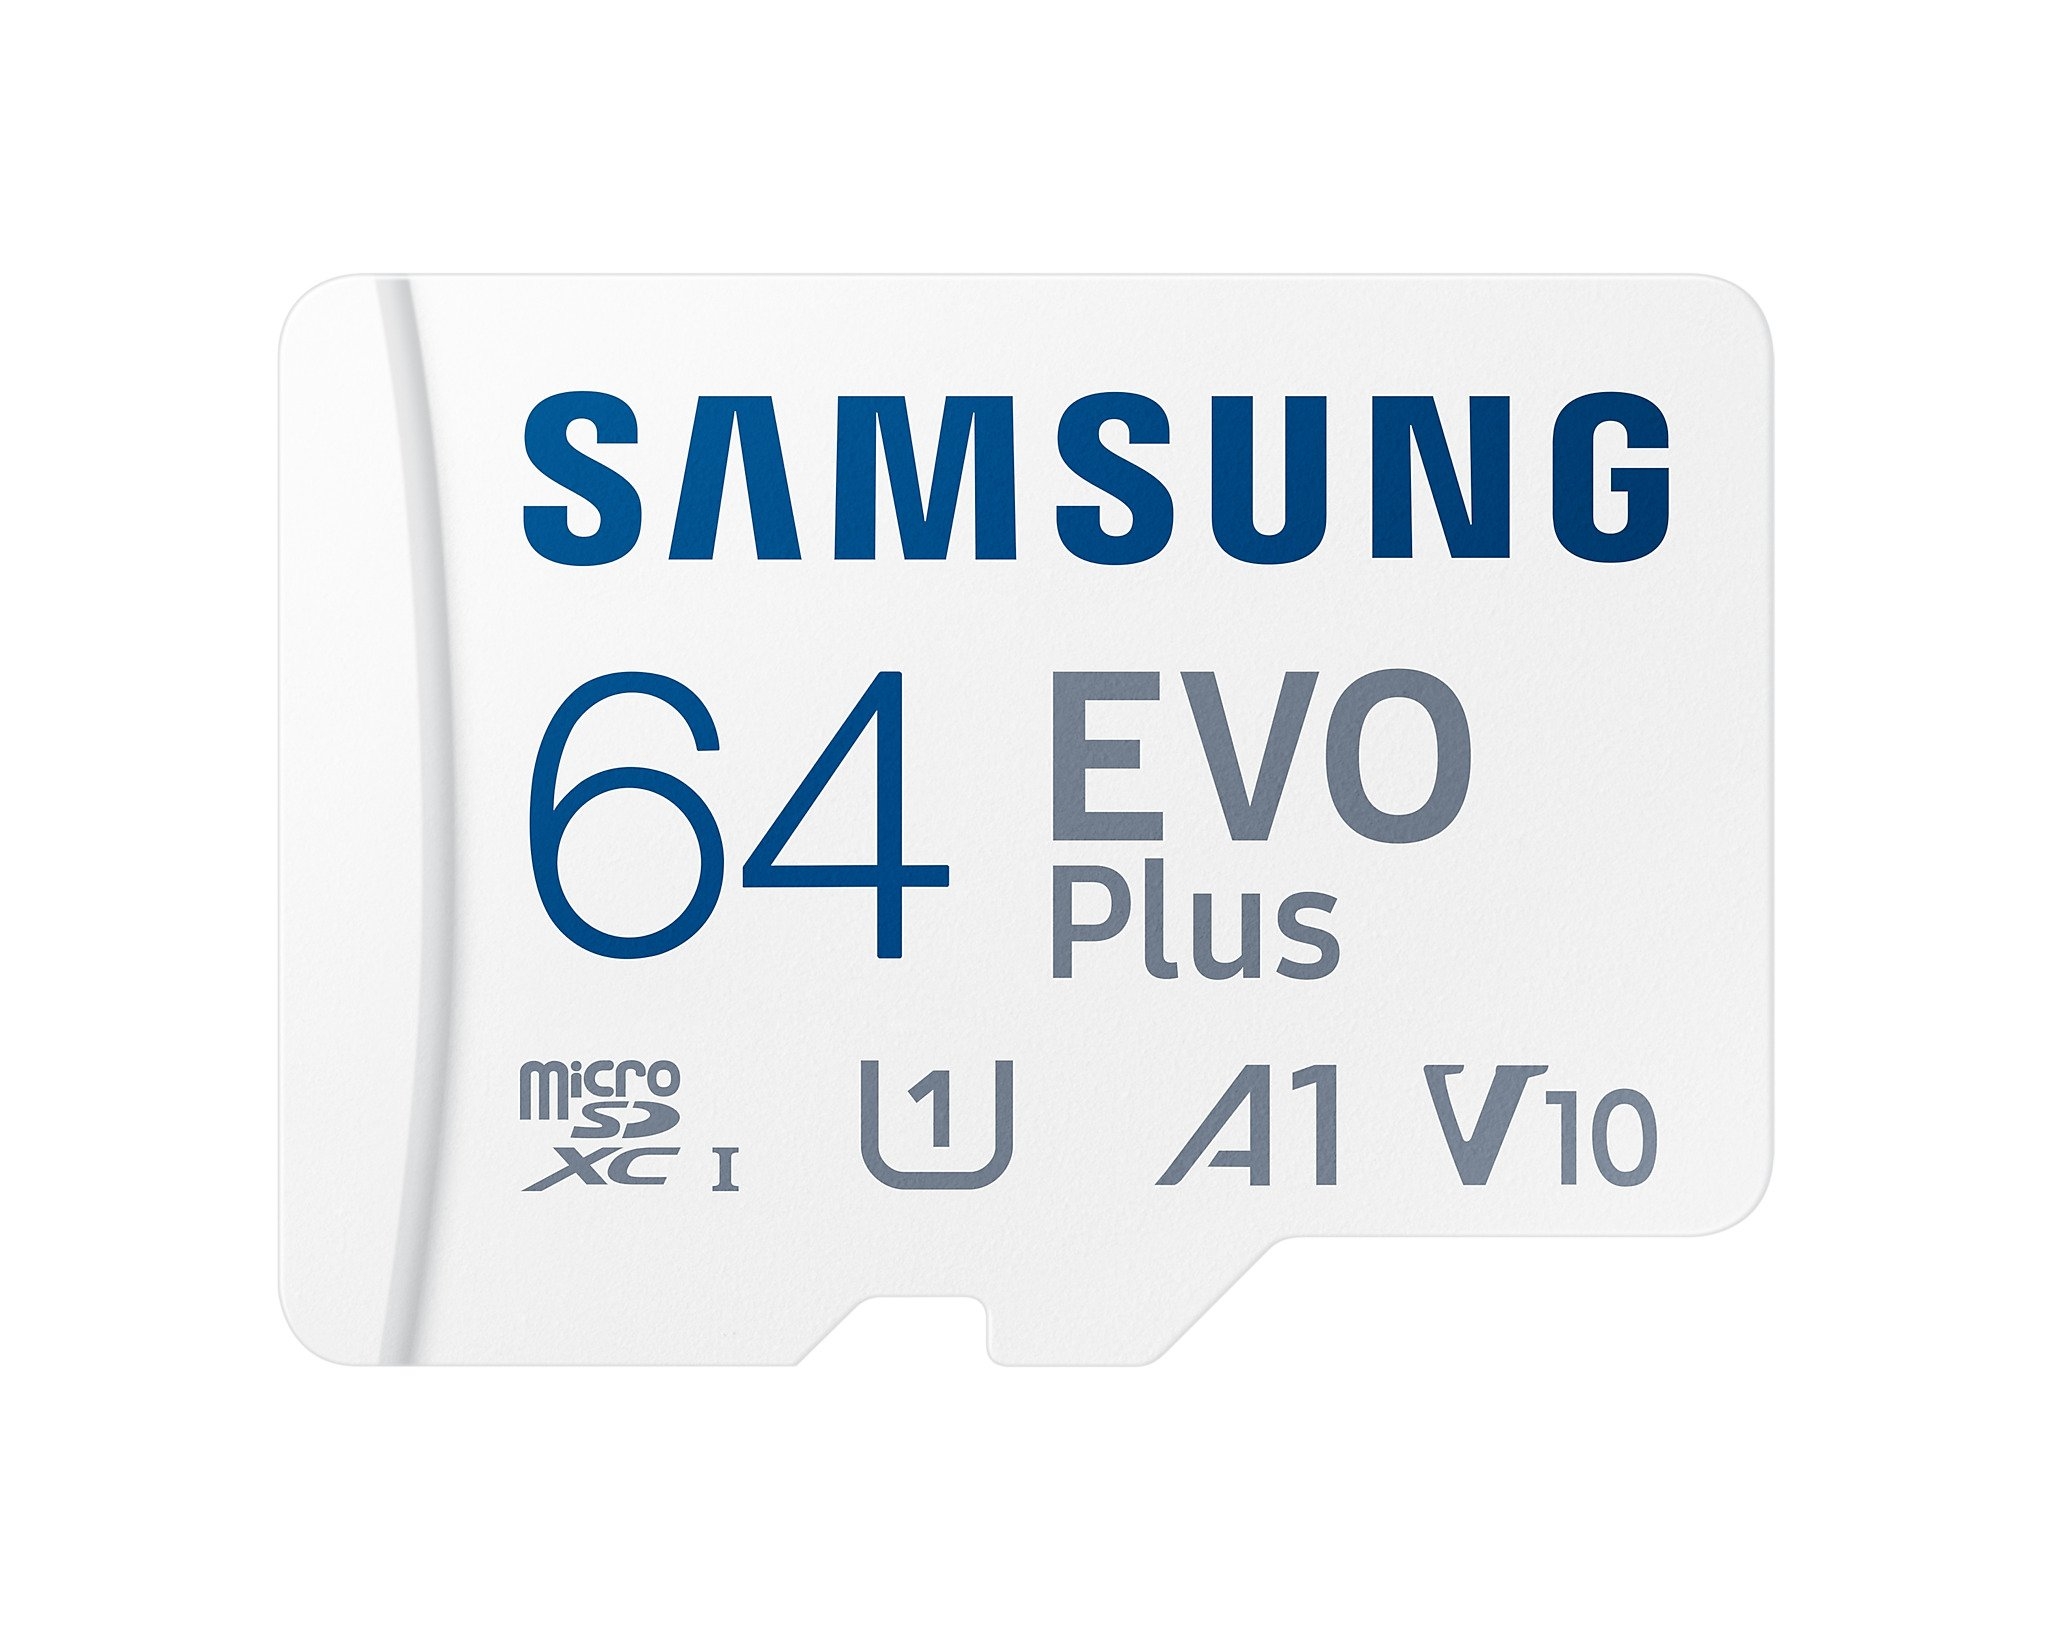 SamSung EVO Plus microSD Card 130MB/s with Adapter – 64GB